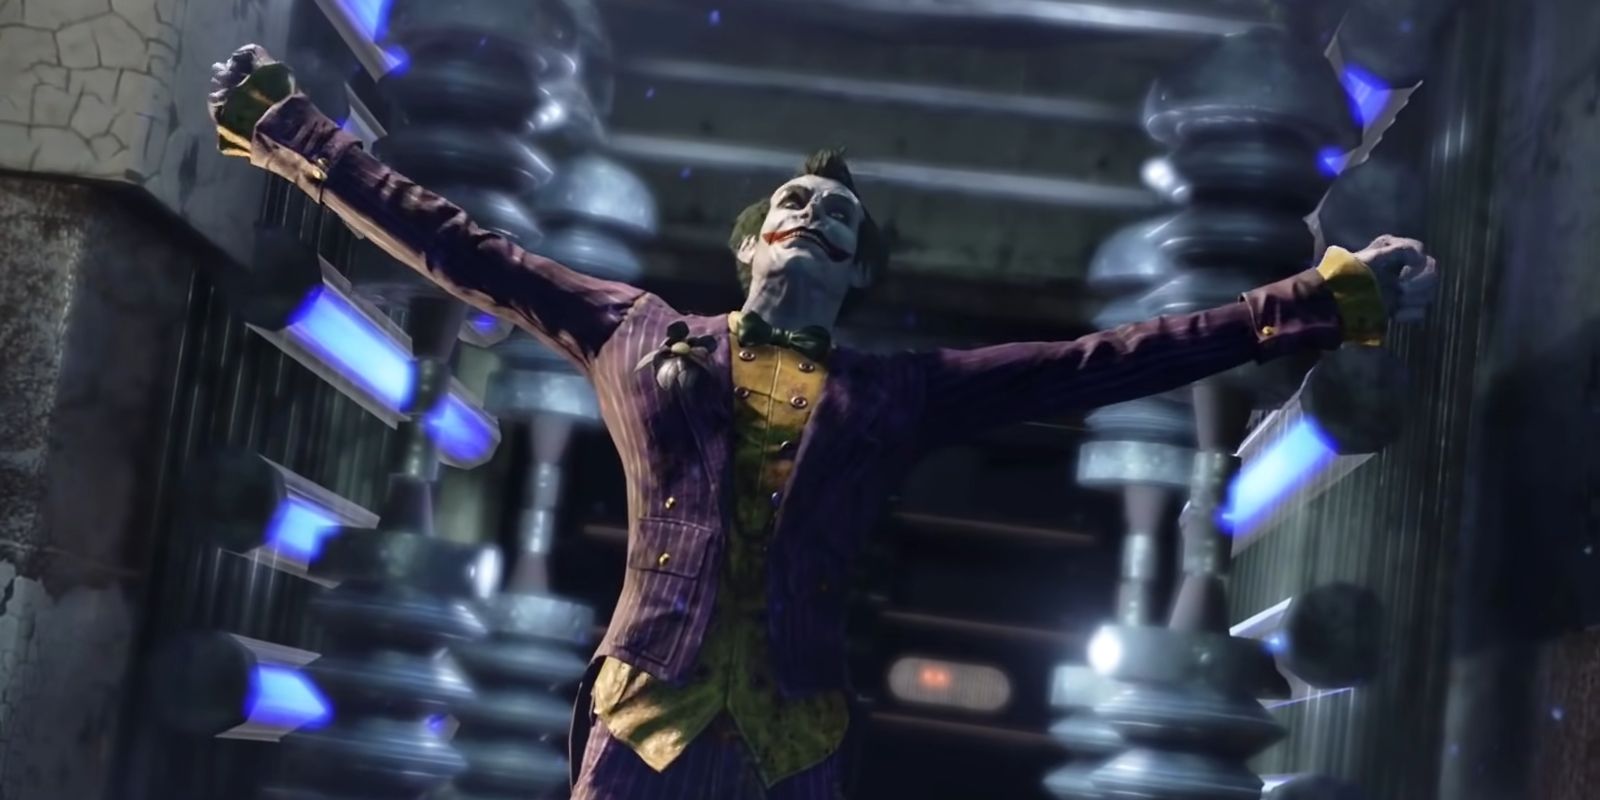 Joker relishing in his breakout in Batman Arkham Asylum